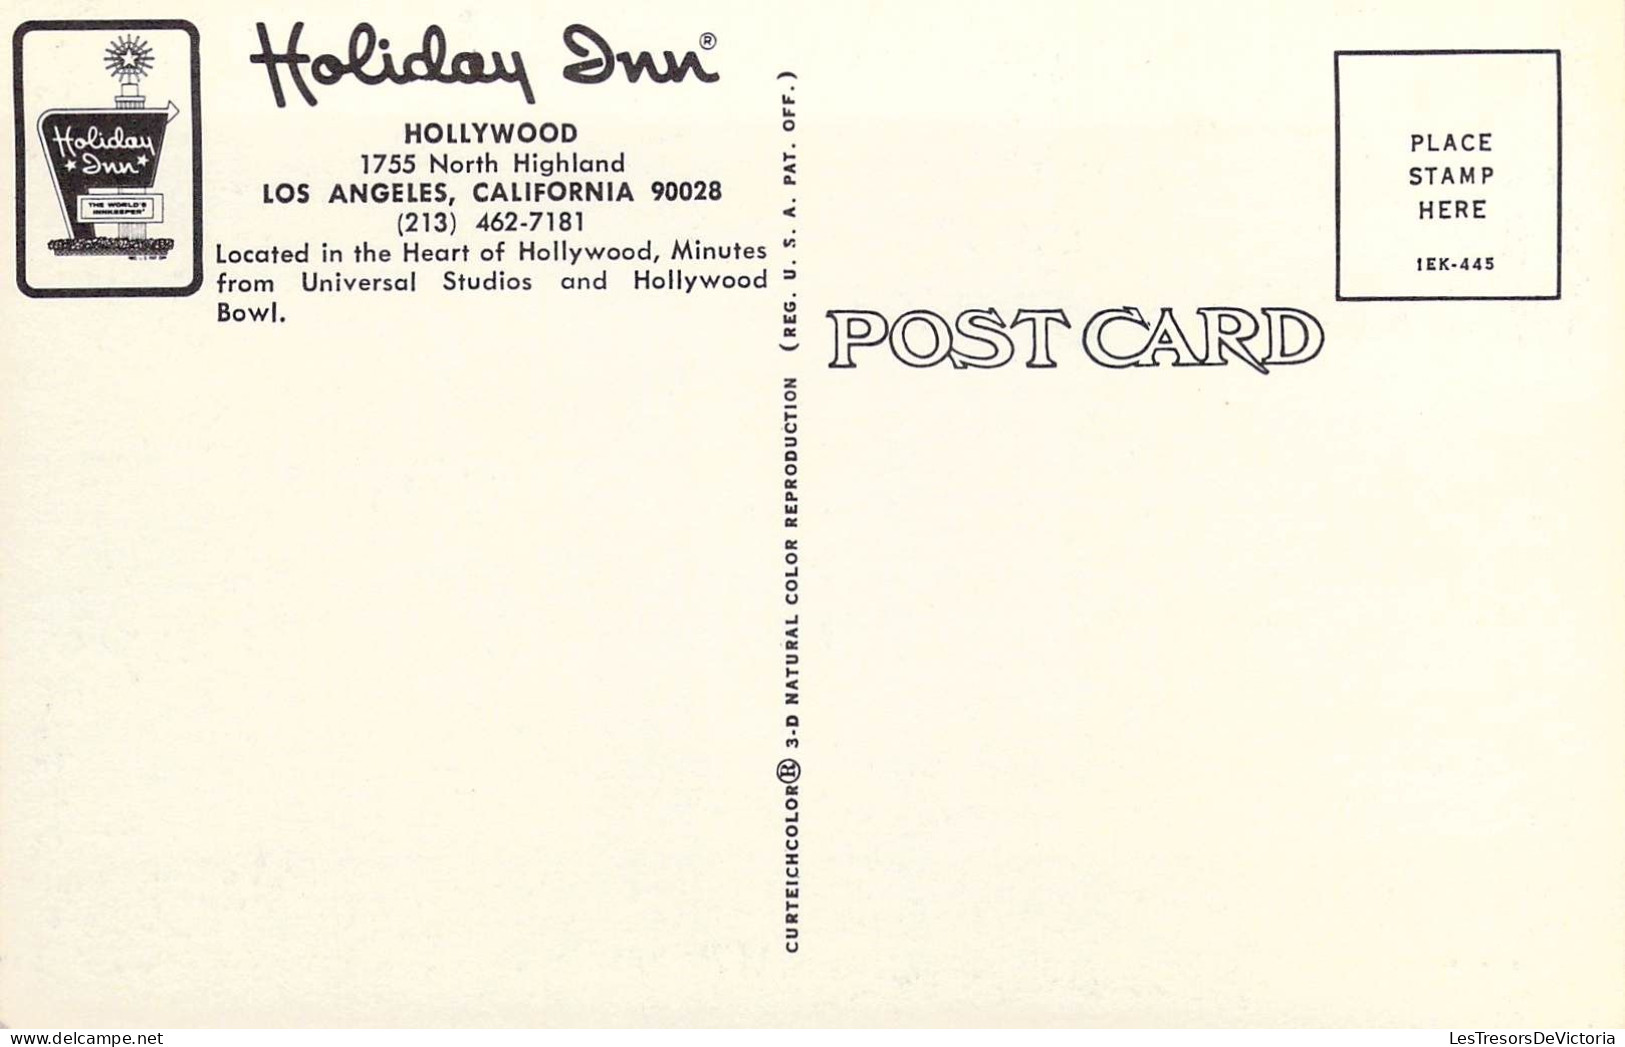 ETATS-UNIS - California - Los Angeles - 1755 North Highland - Carte Postale Ancienne - Los Angeles